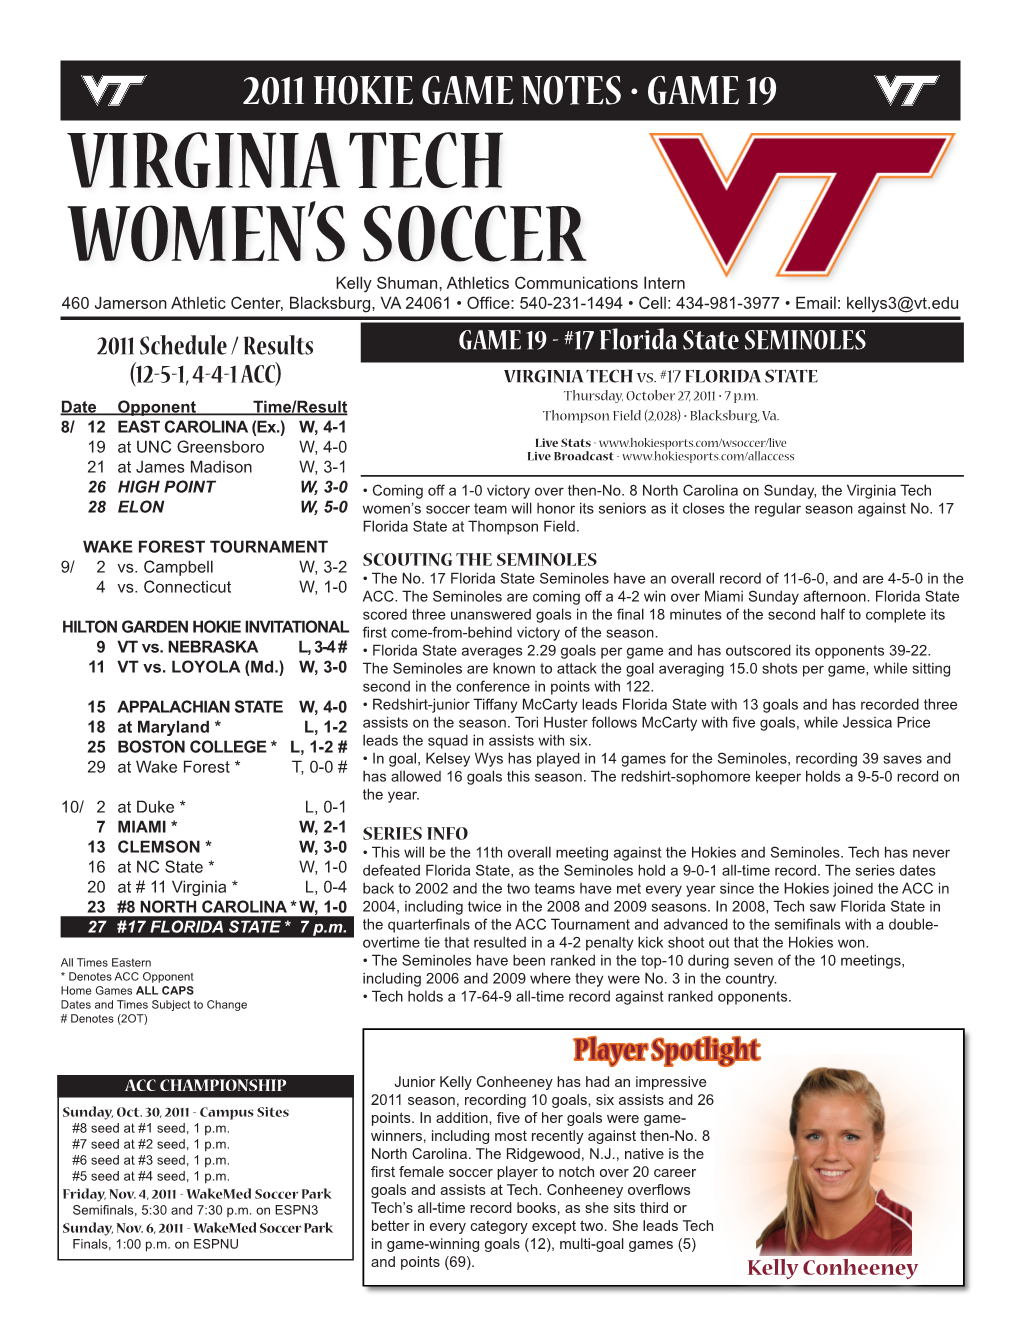 Virginia Tech Women's Soccer